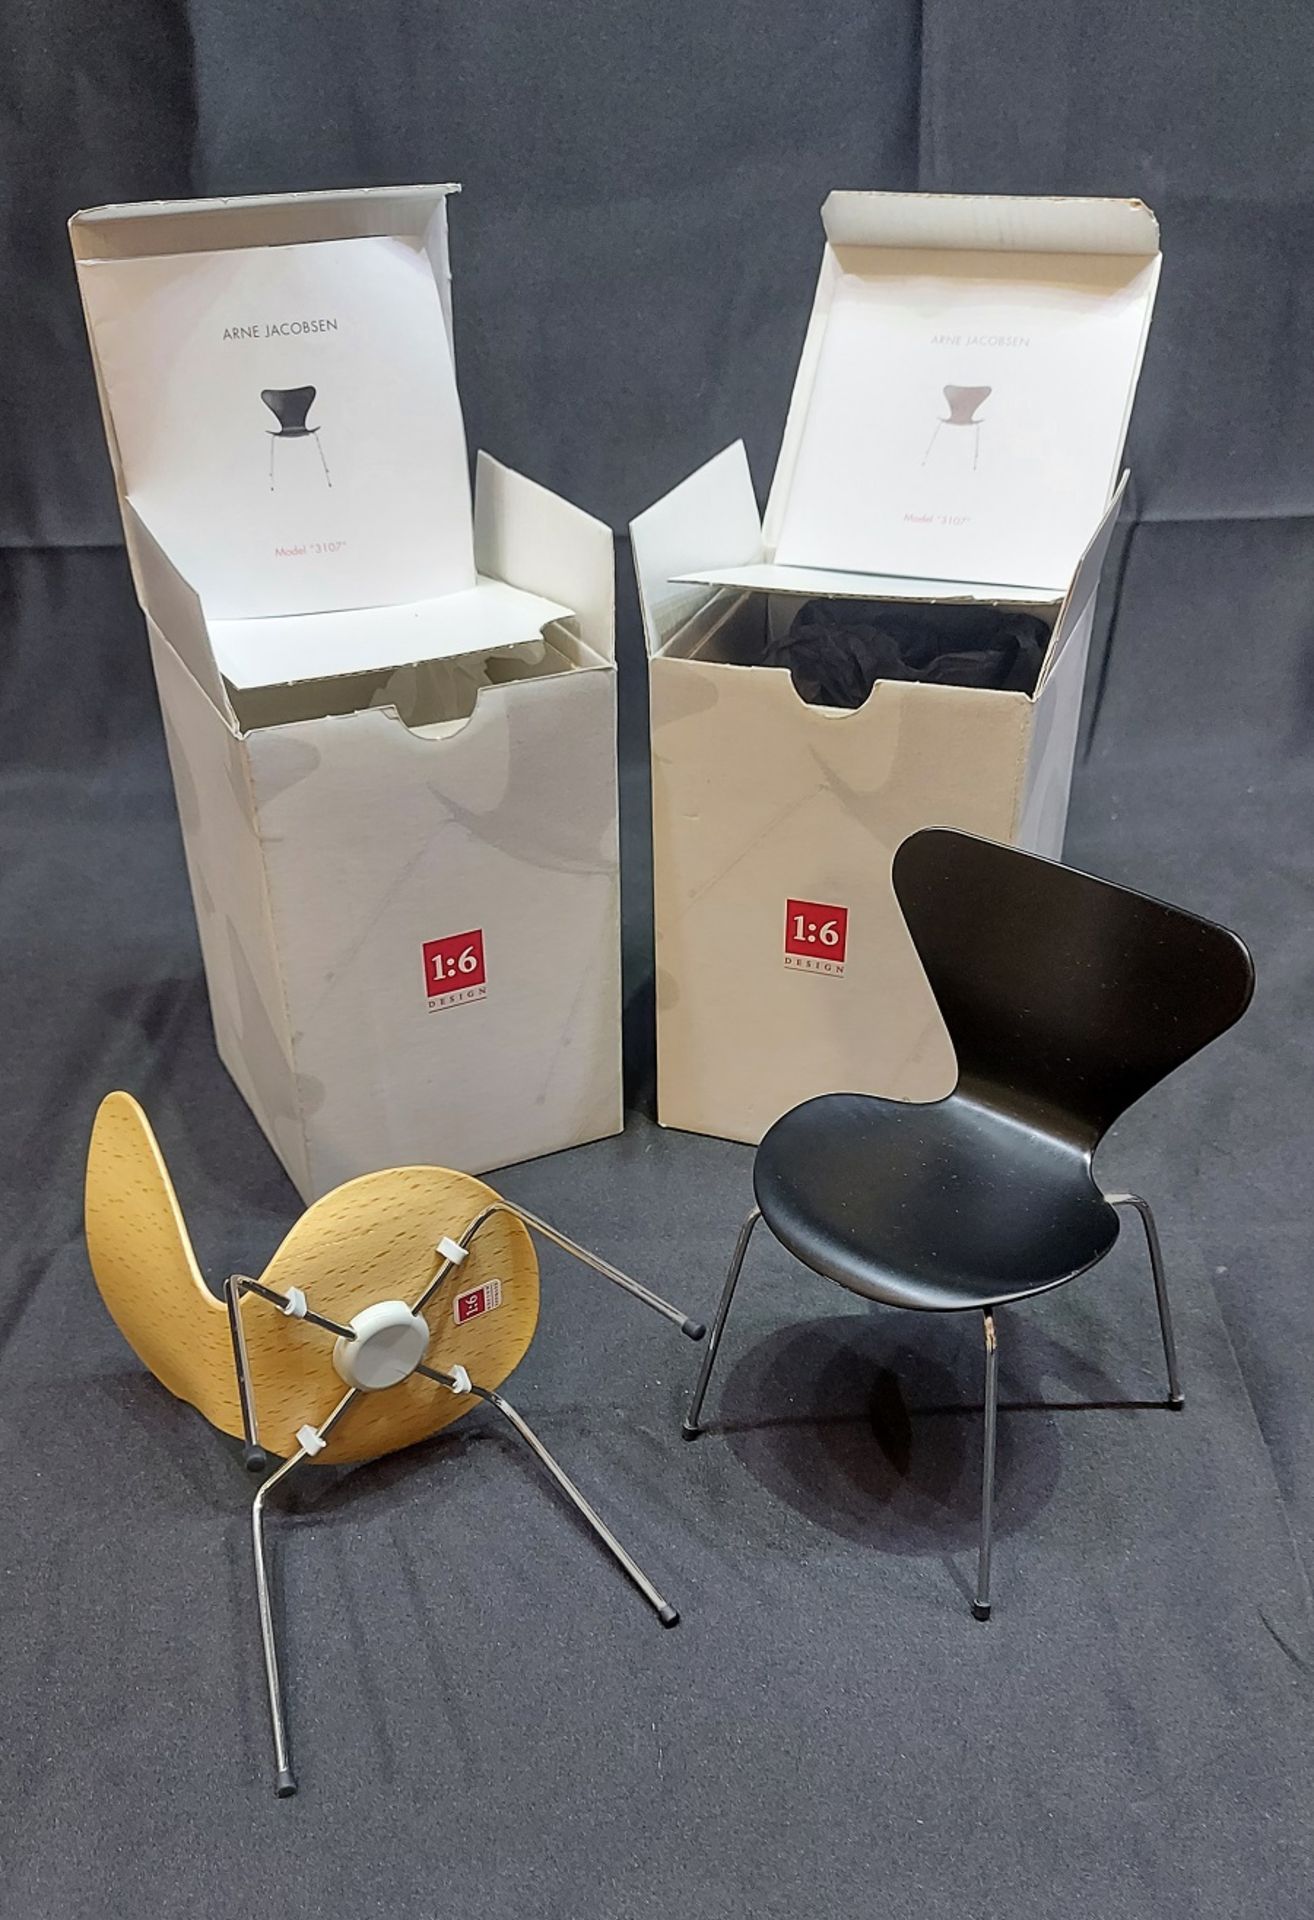 Sammlerstücke! 2 Stk. Arne Jacobsen Museum Miniatur Stuhl Kollektion 1x buche 1x schwarz - Bild 6 aus 11